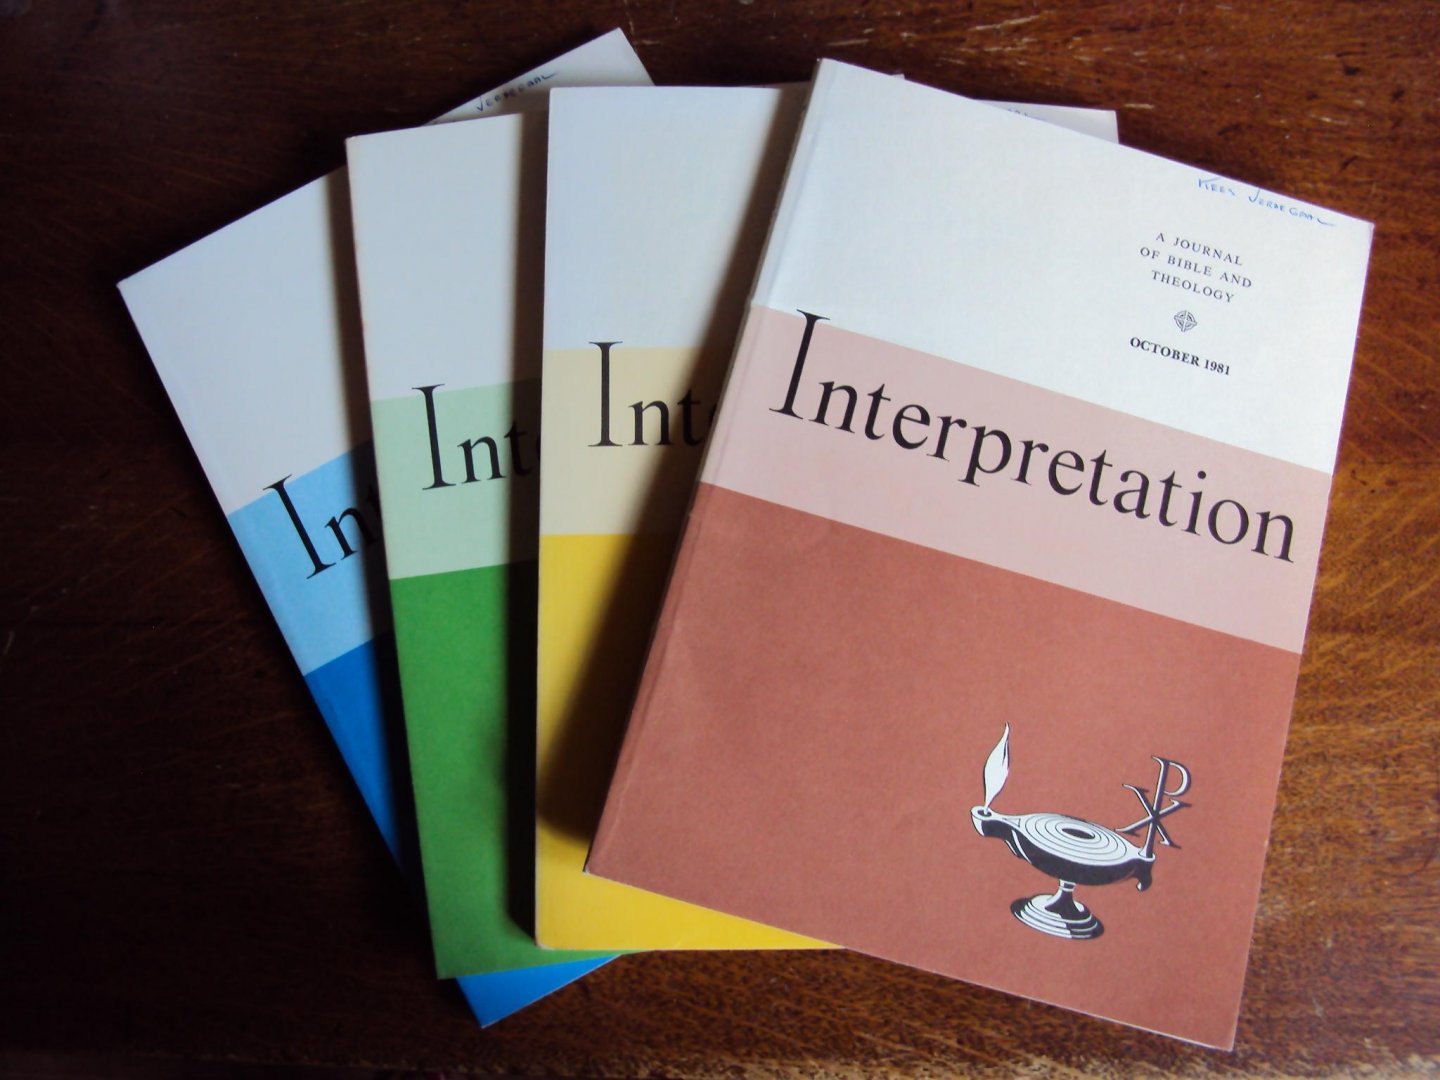  - Interpretation. A Journal of Bible and Theology, Vol. XXXV nos. 1-4